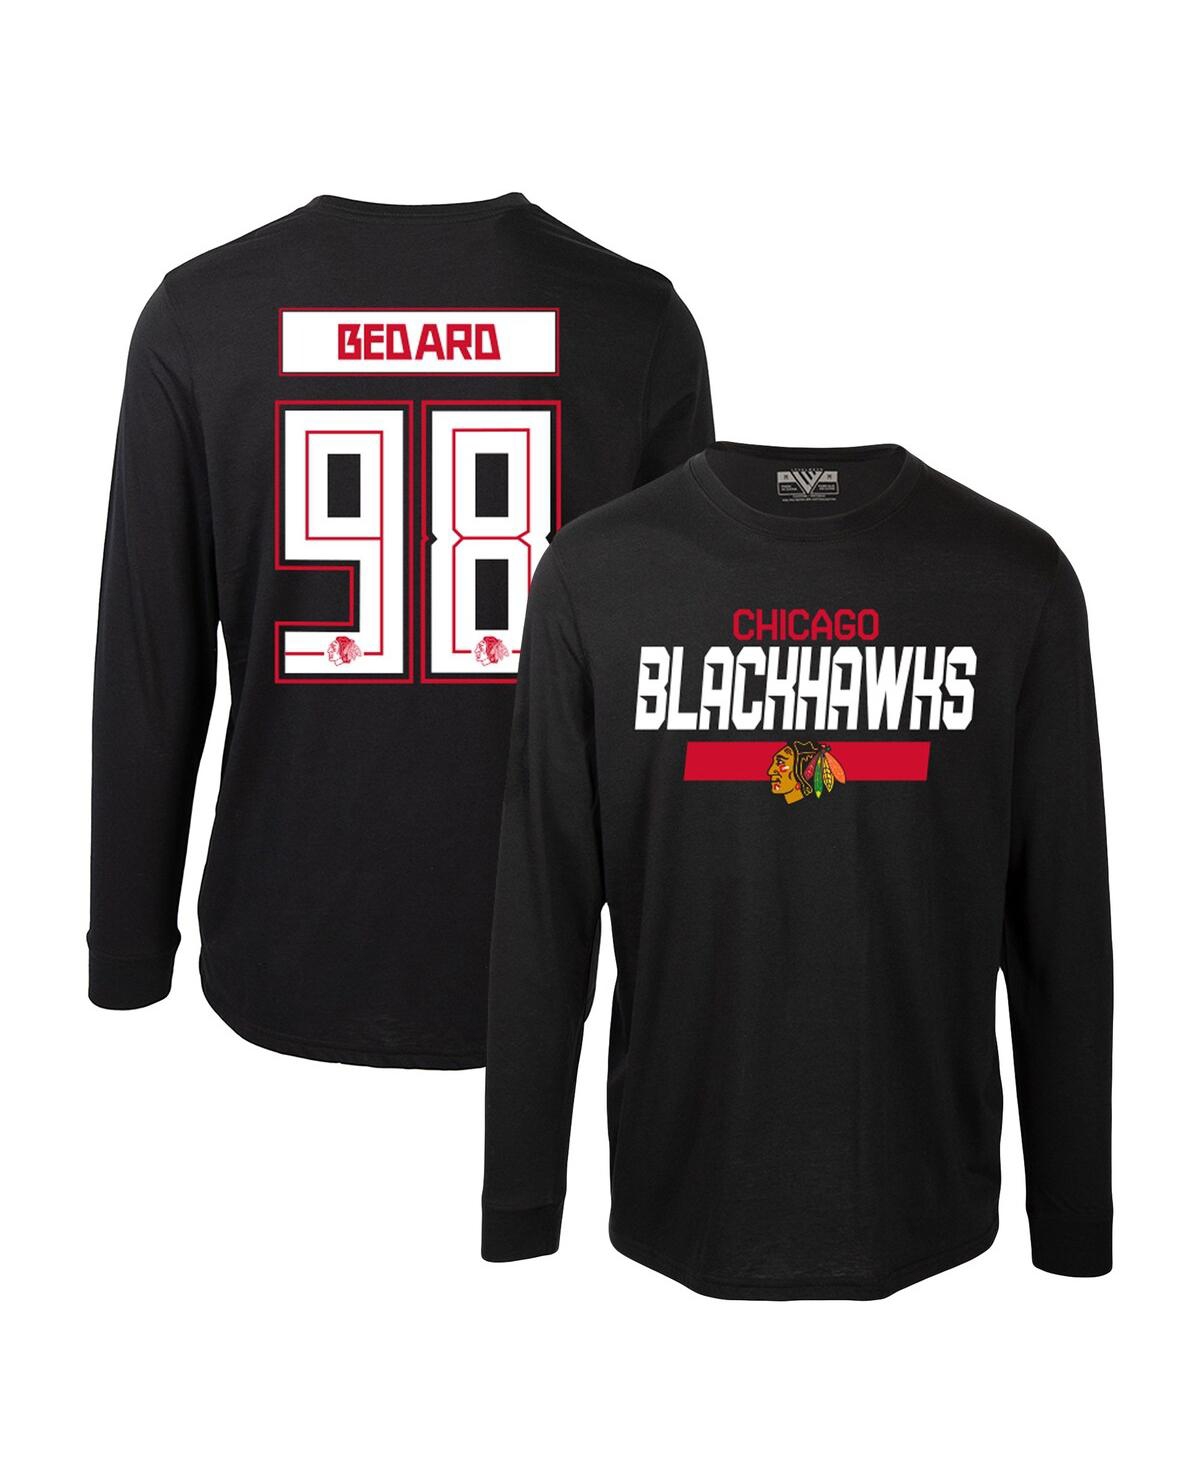 Men's LevelWear Connor Bedard Black Chicago Blackhawks Oscar Name and Number Long Sleeve T-shirt - Black